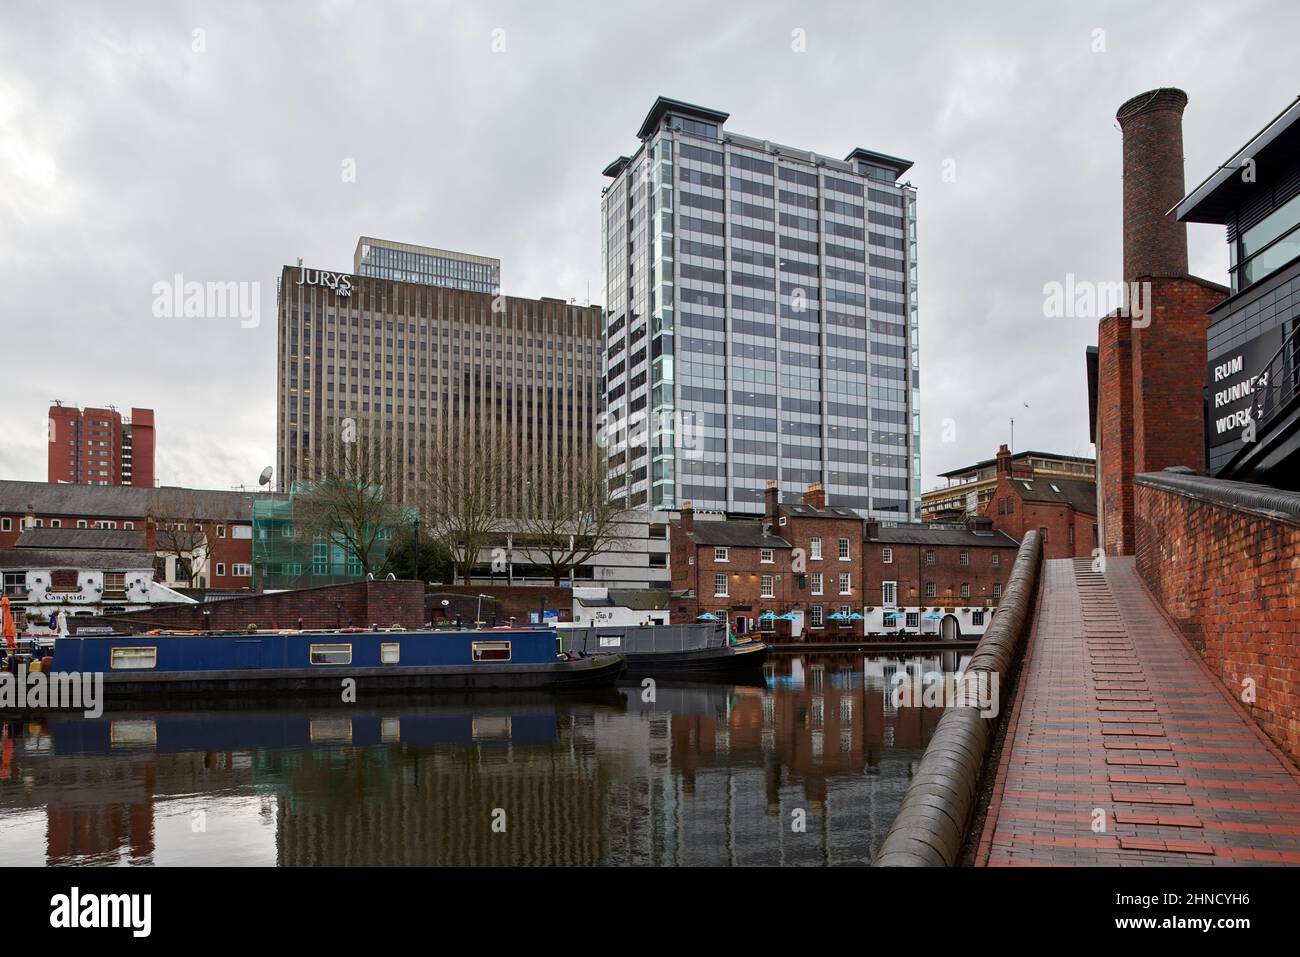 View towards ITV Central head office, Jury's Inn and 14 Gas Street Garage, Birmingham, England. Stock Photo